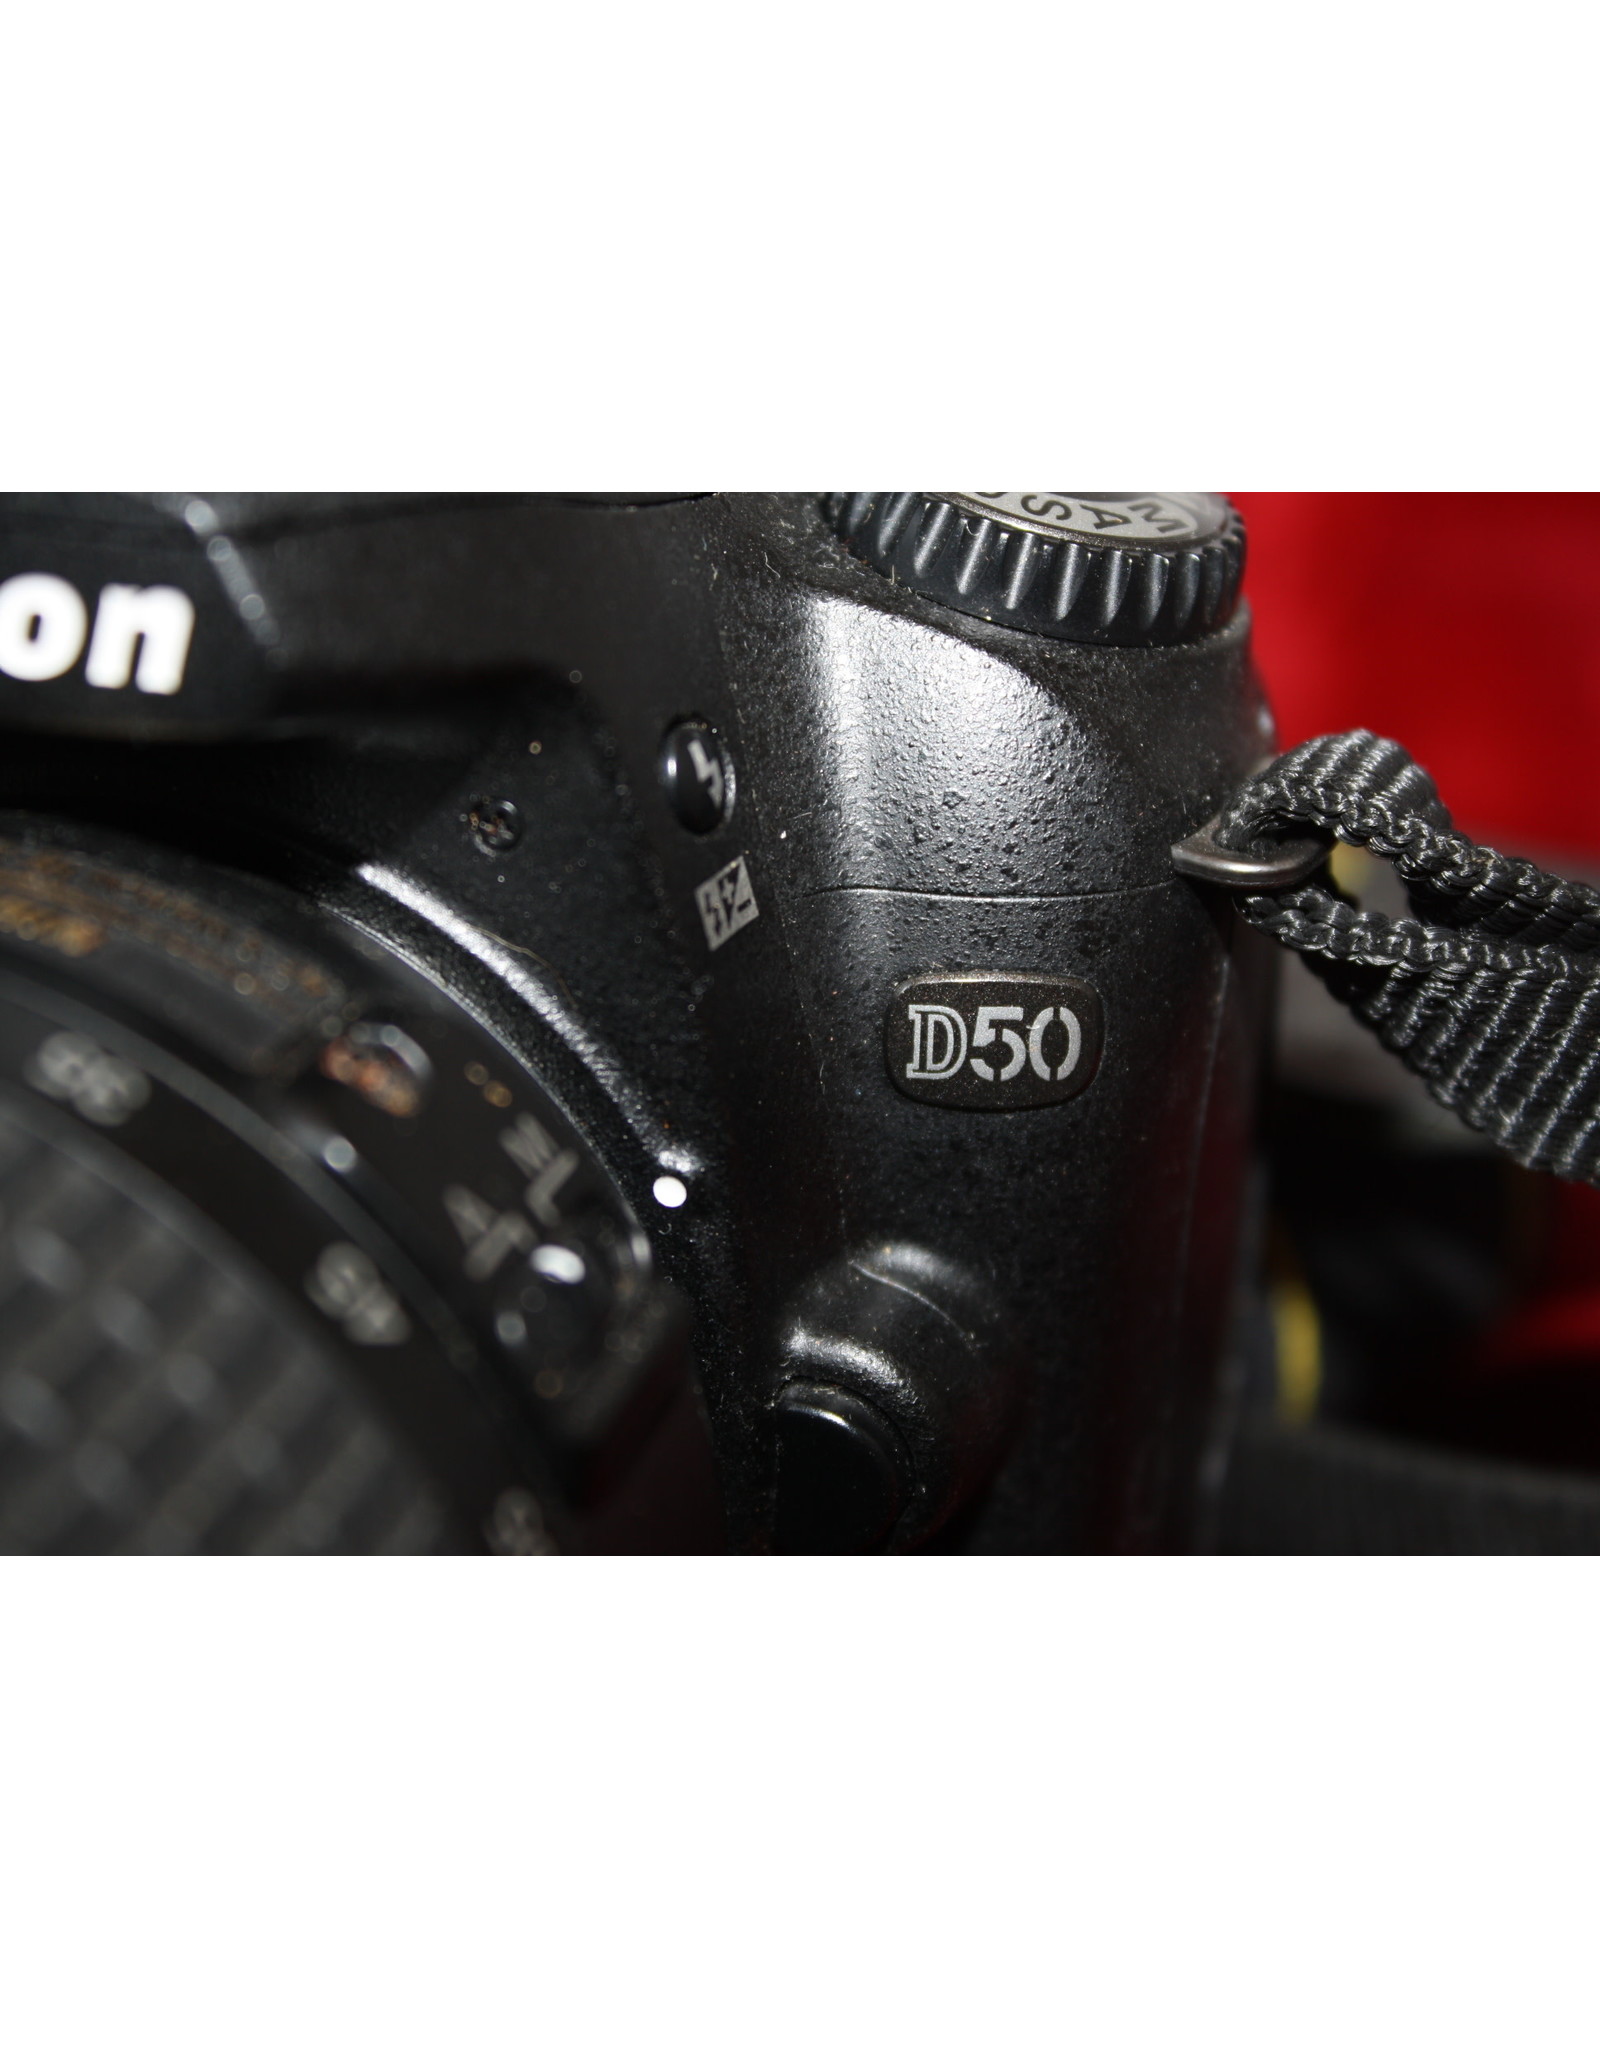 Nikon Nikon D50 6.1MP Digital SLR Camera with 18-55mm Lens- Black  Body (Pre-owned)